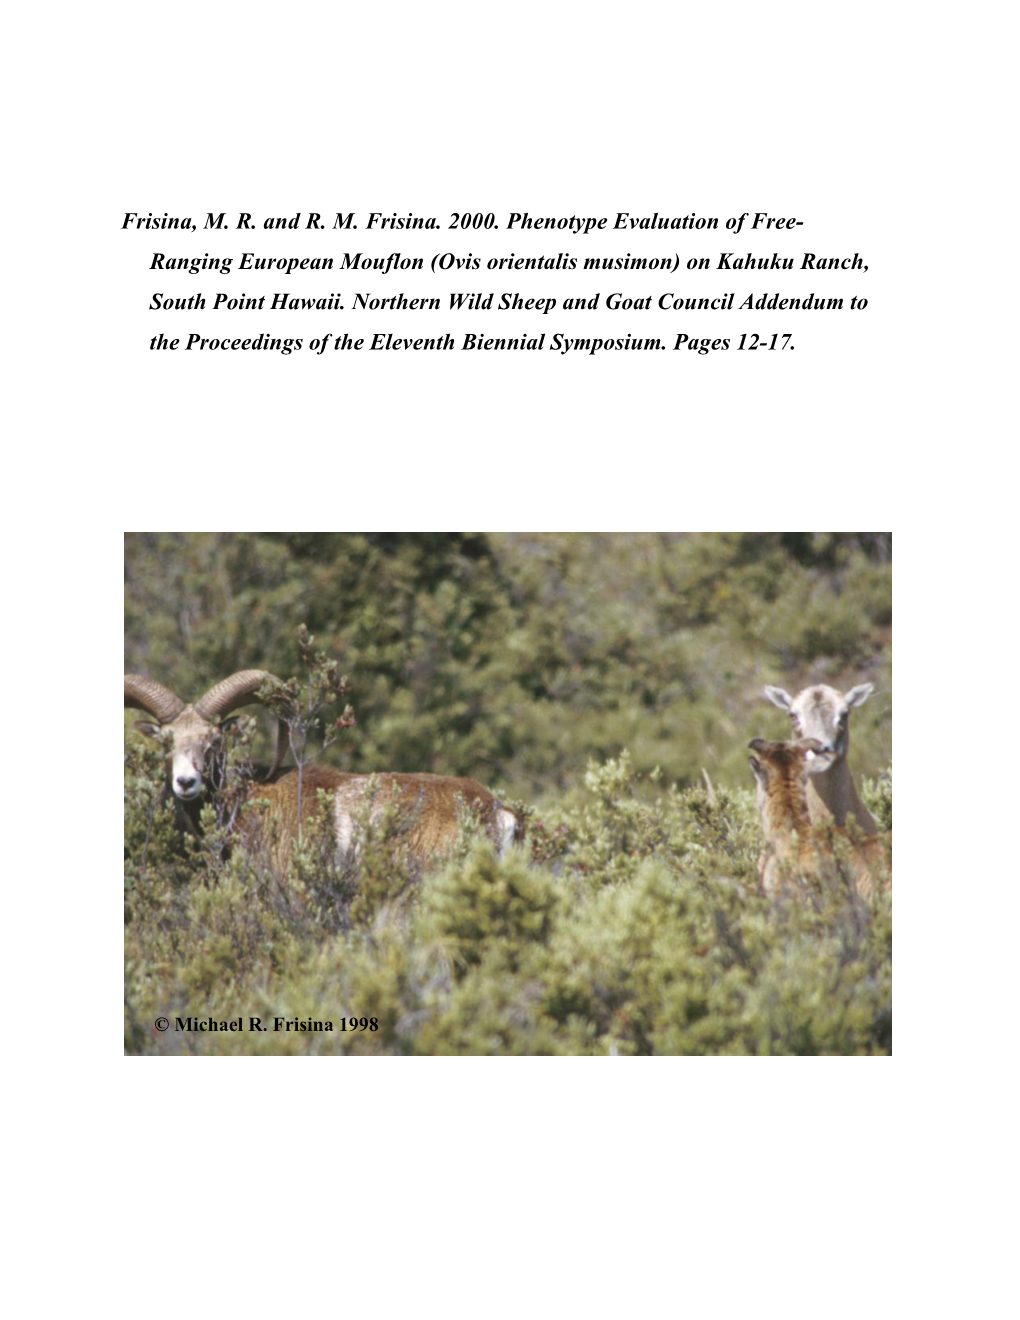 Phenotype Evaluation of Free-Ranging European Mouflon (Ovis Orientalis Musimon) on Kahuku Ranch, South Point Hawaii